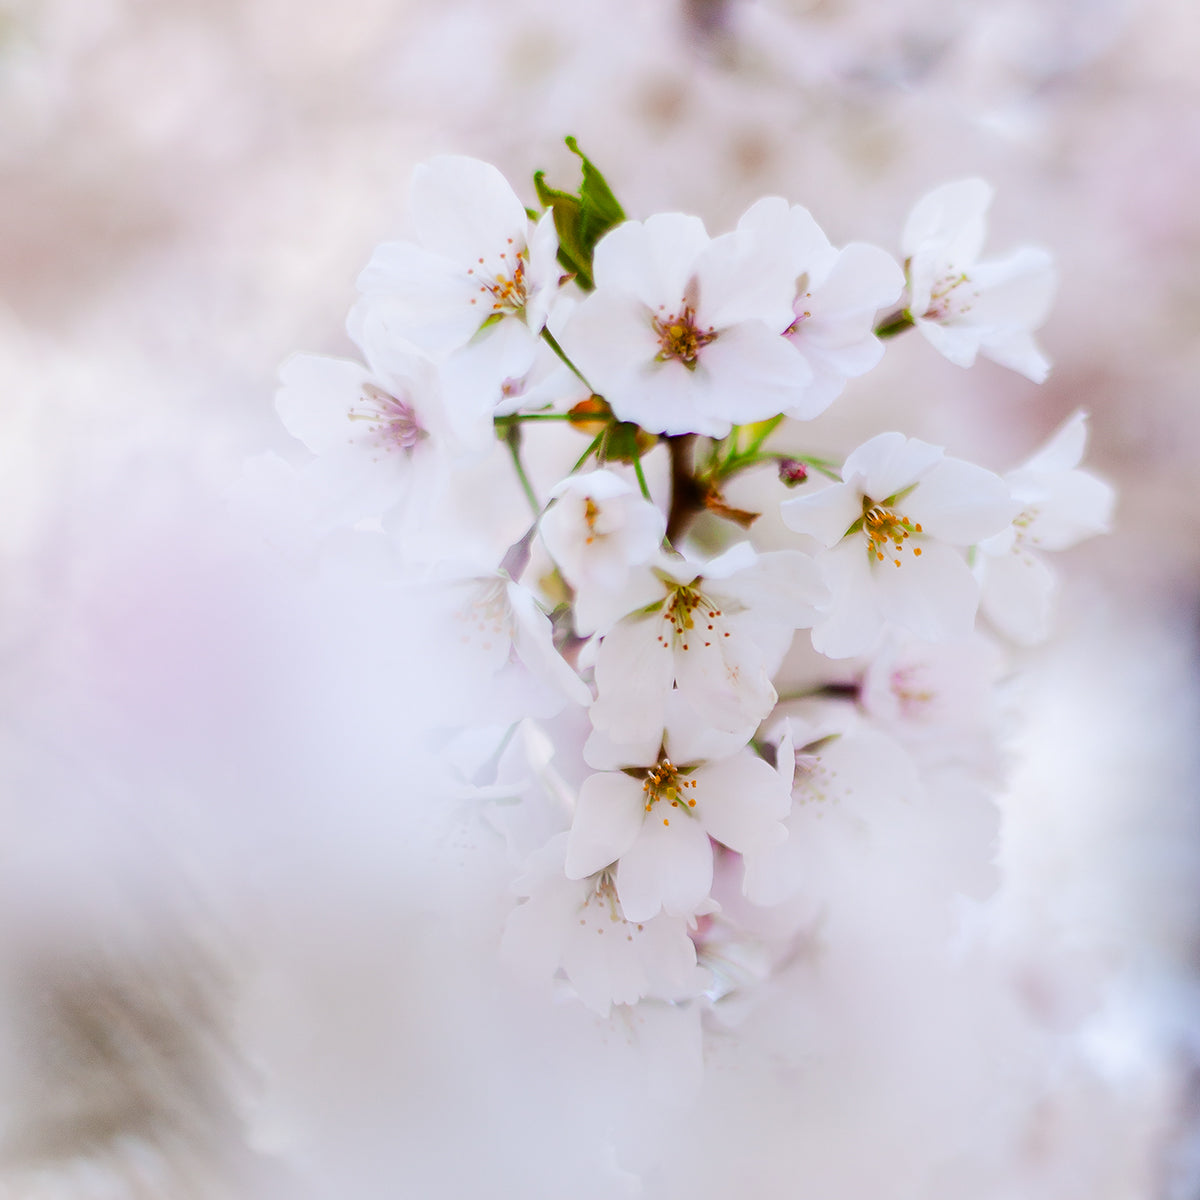 Hidden in Blossoms